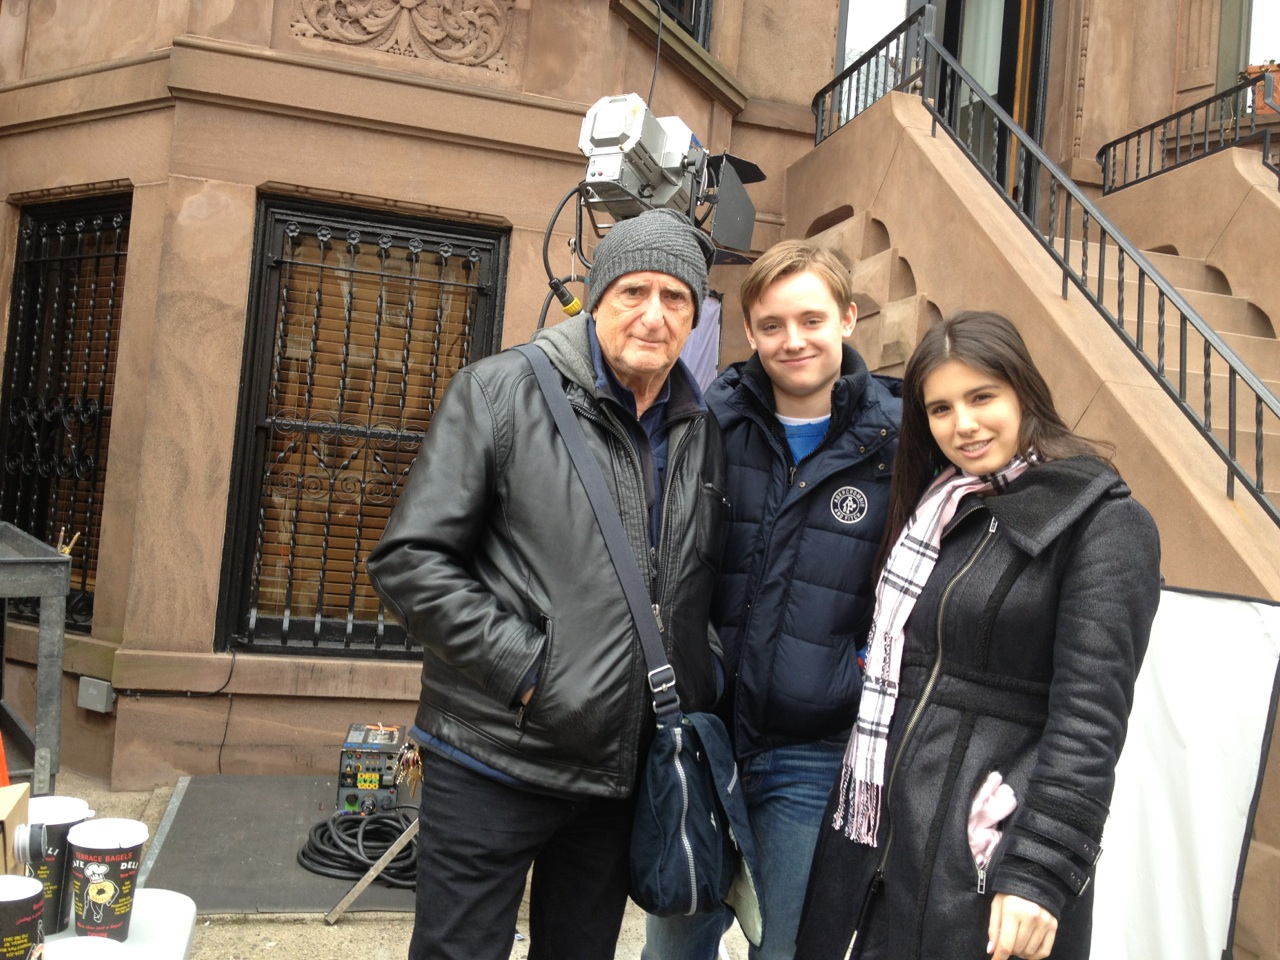 Cameron Fachman, Director- Bob Giraldi and Angelica Boccella. On set 